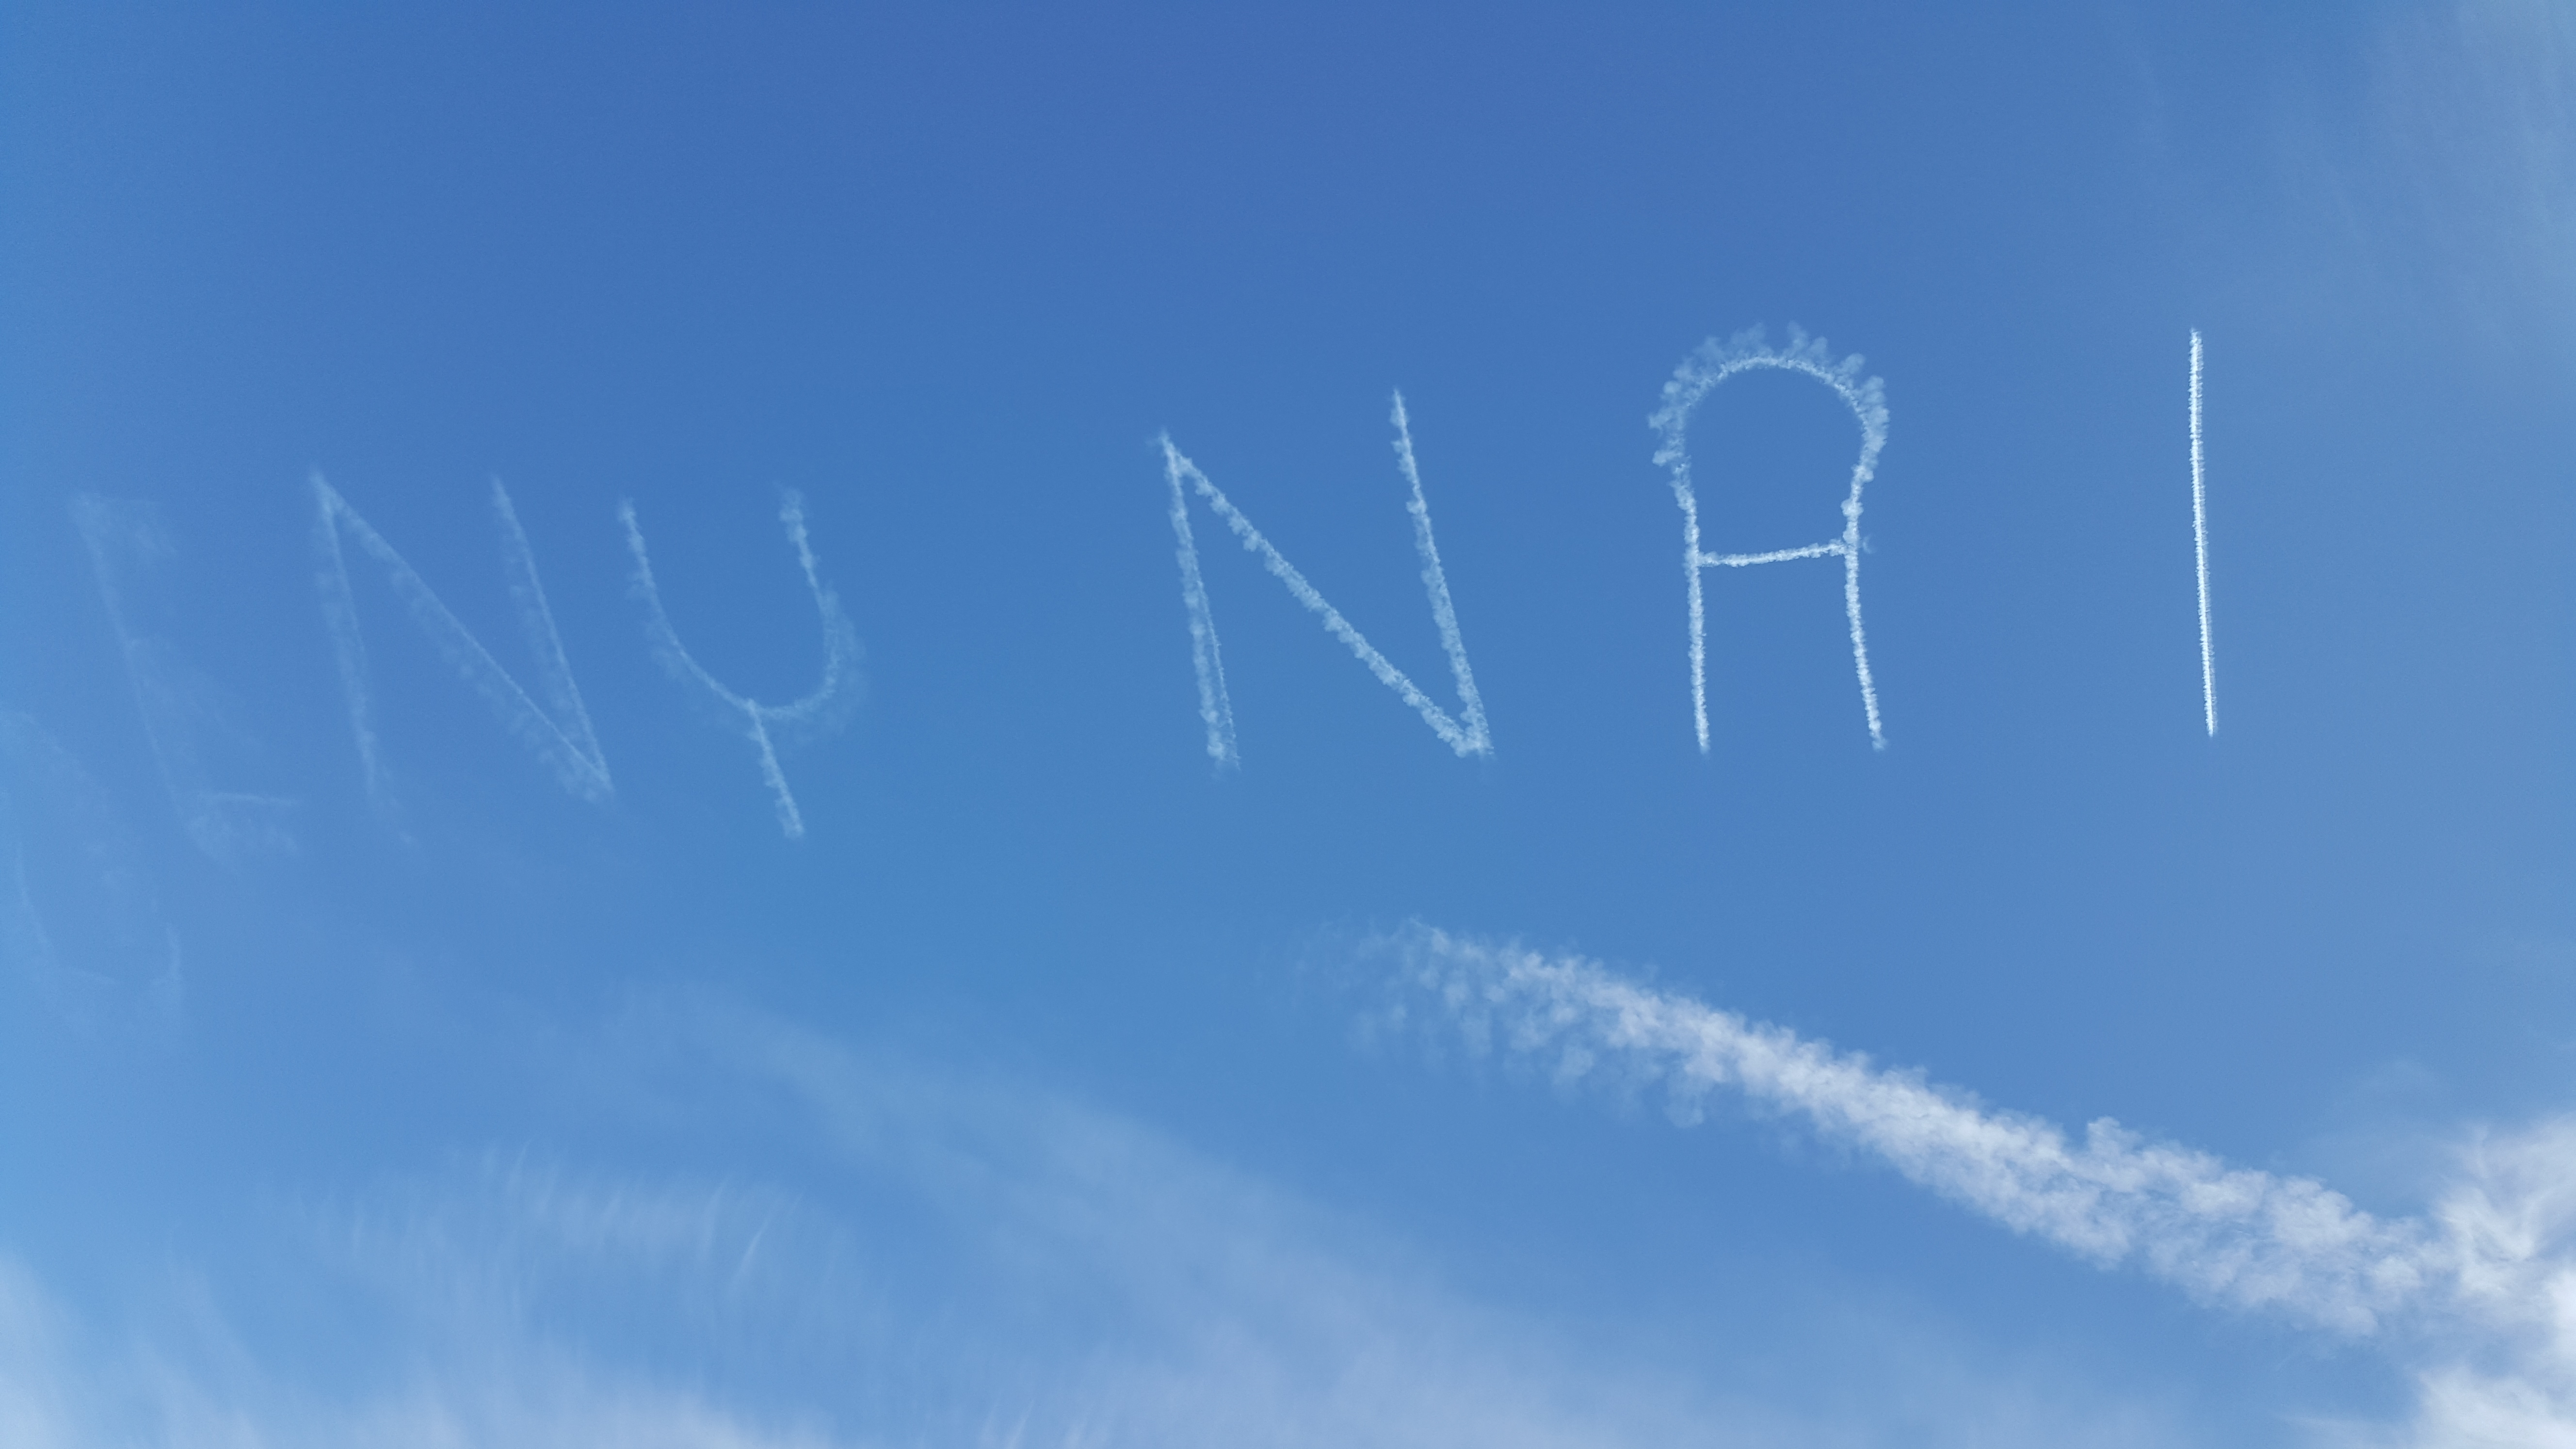 Typo in the sky: Pilot association’s Va. skywriting gets a redo